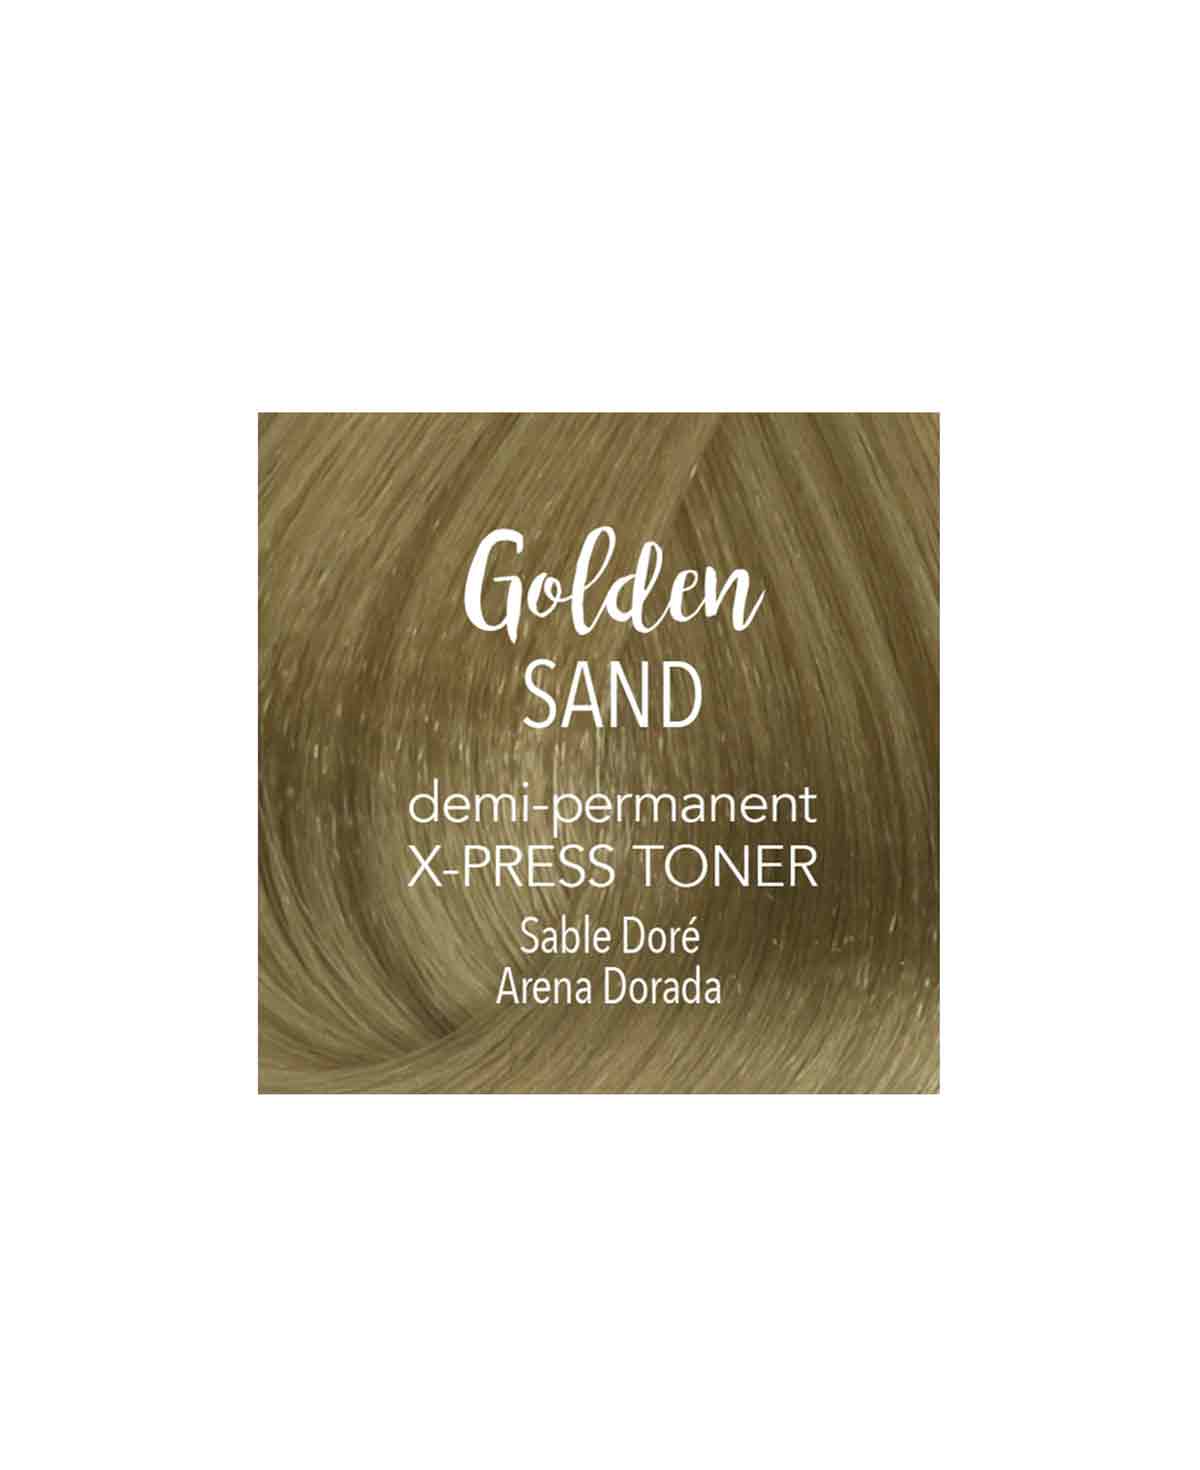 Mydentity X-Press Toner Golden Sand 58g